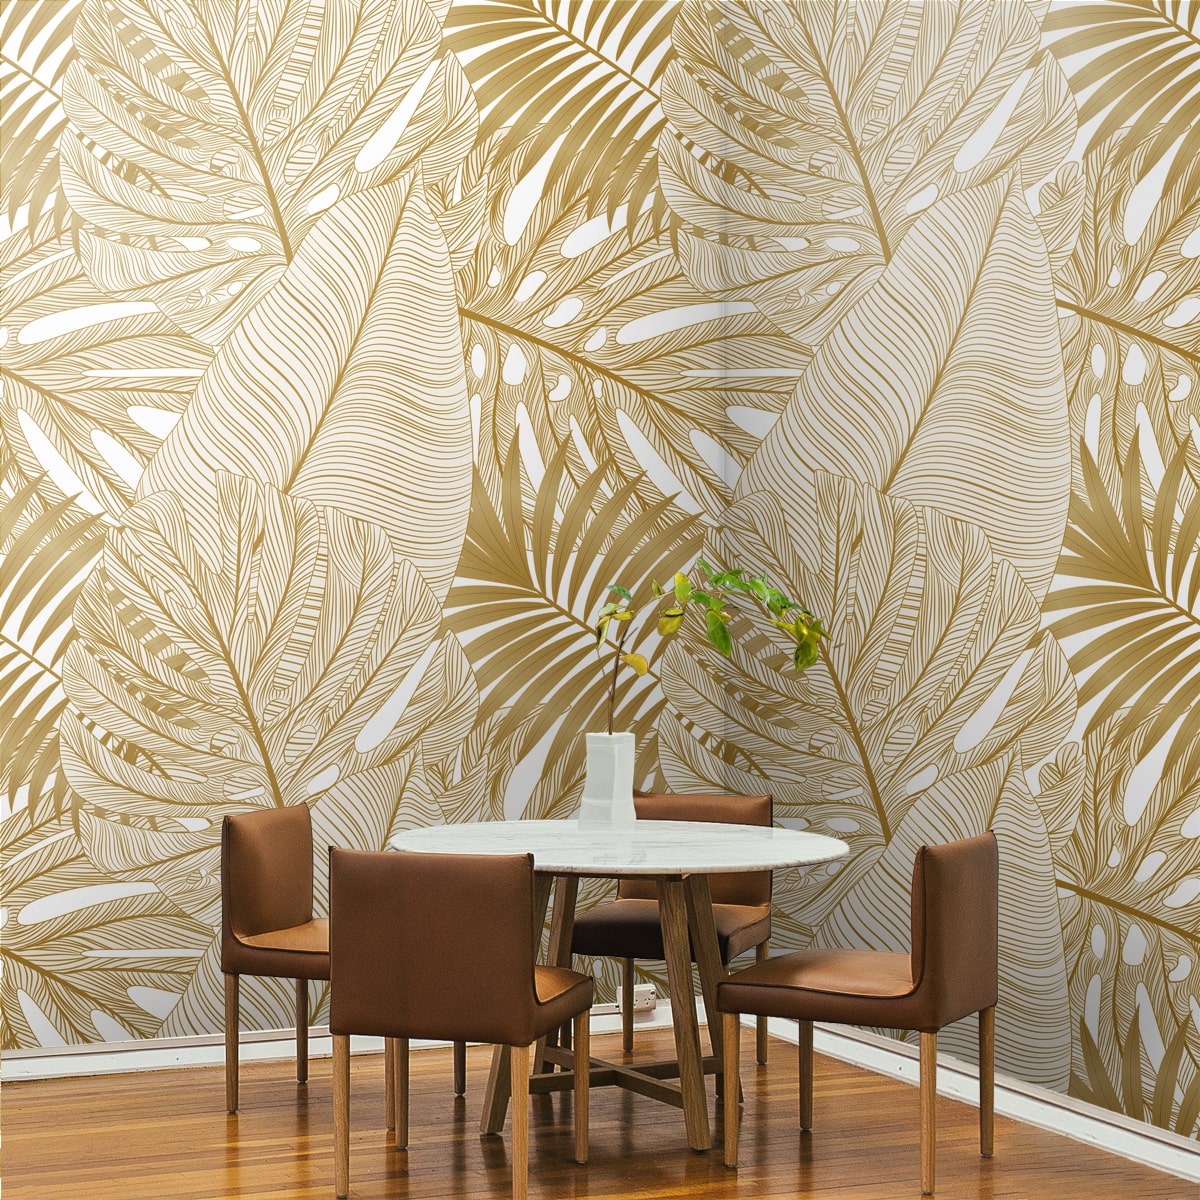 Gilded Greenery Tropical Leafy Splendor Wallpaper for Rooms